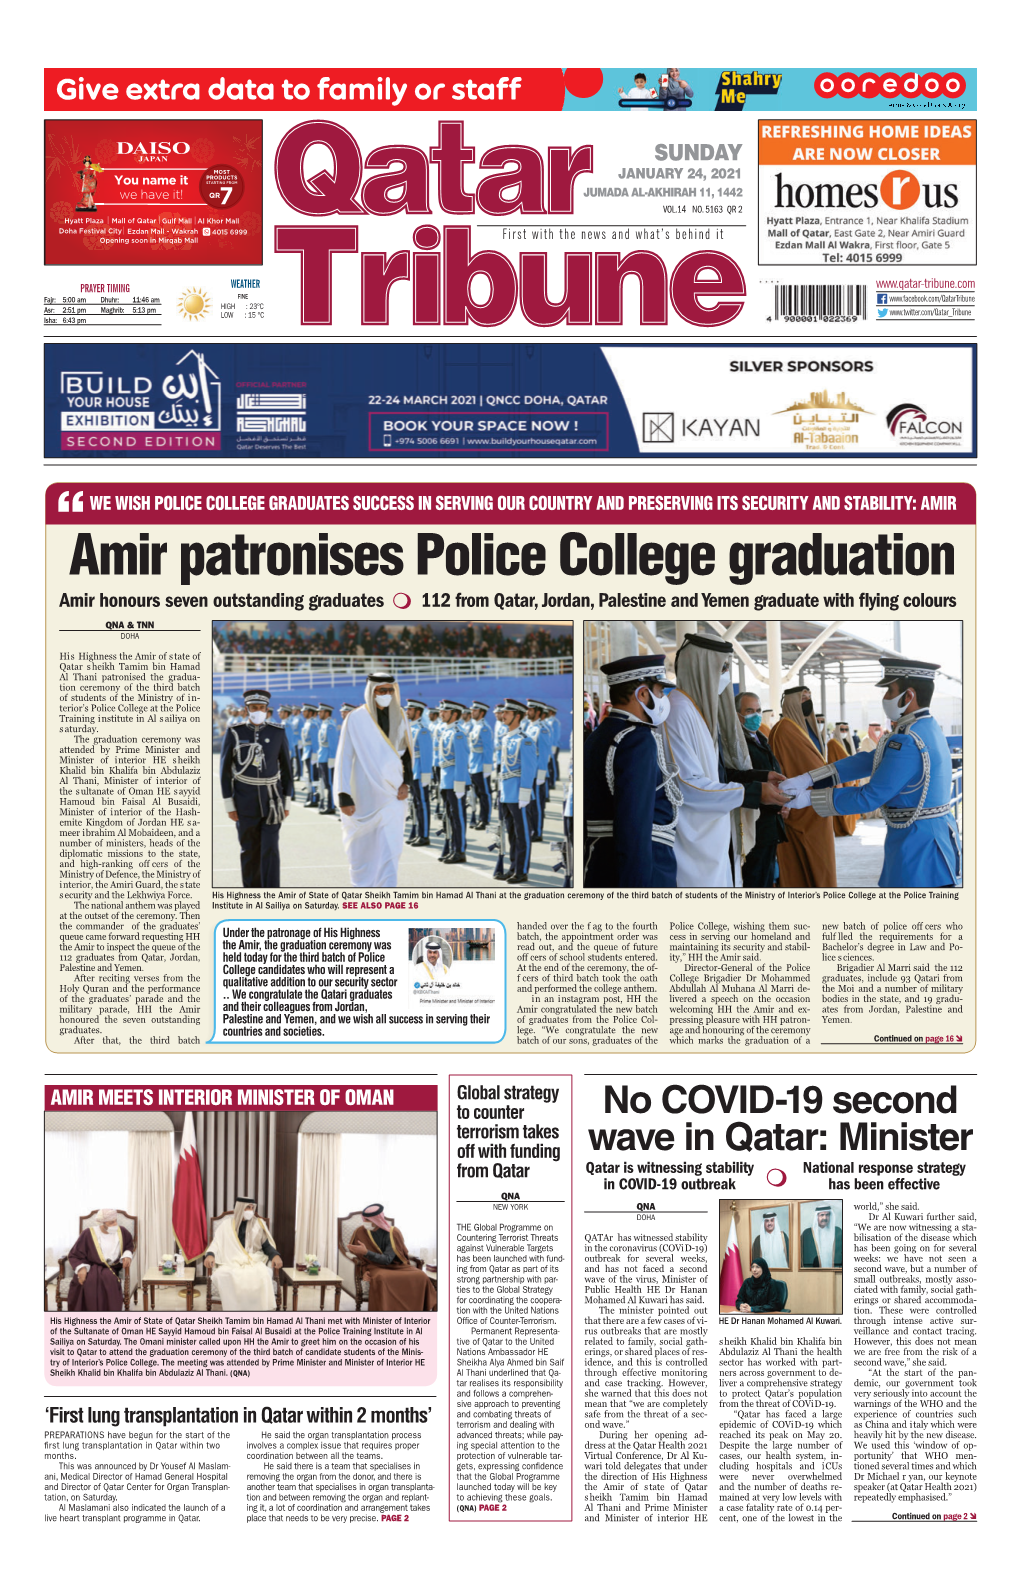 Amir Patronises Police College Graduation